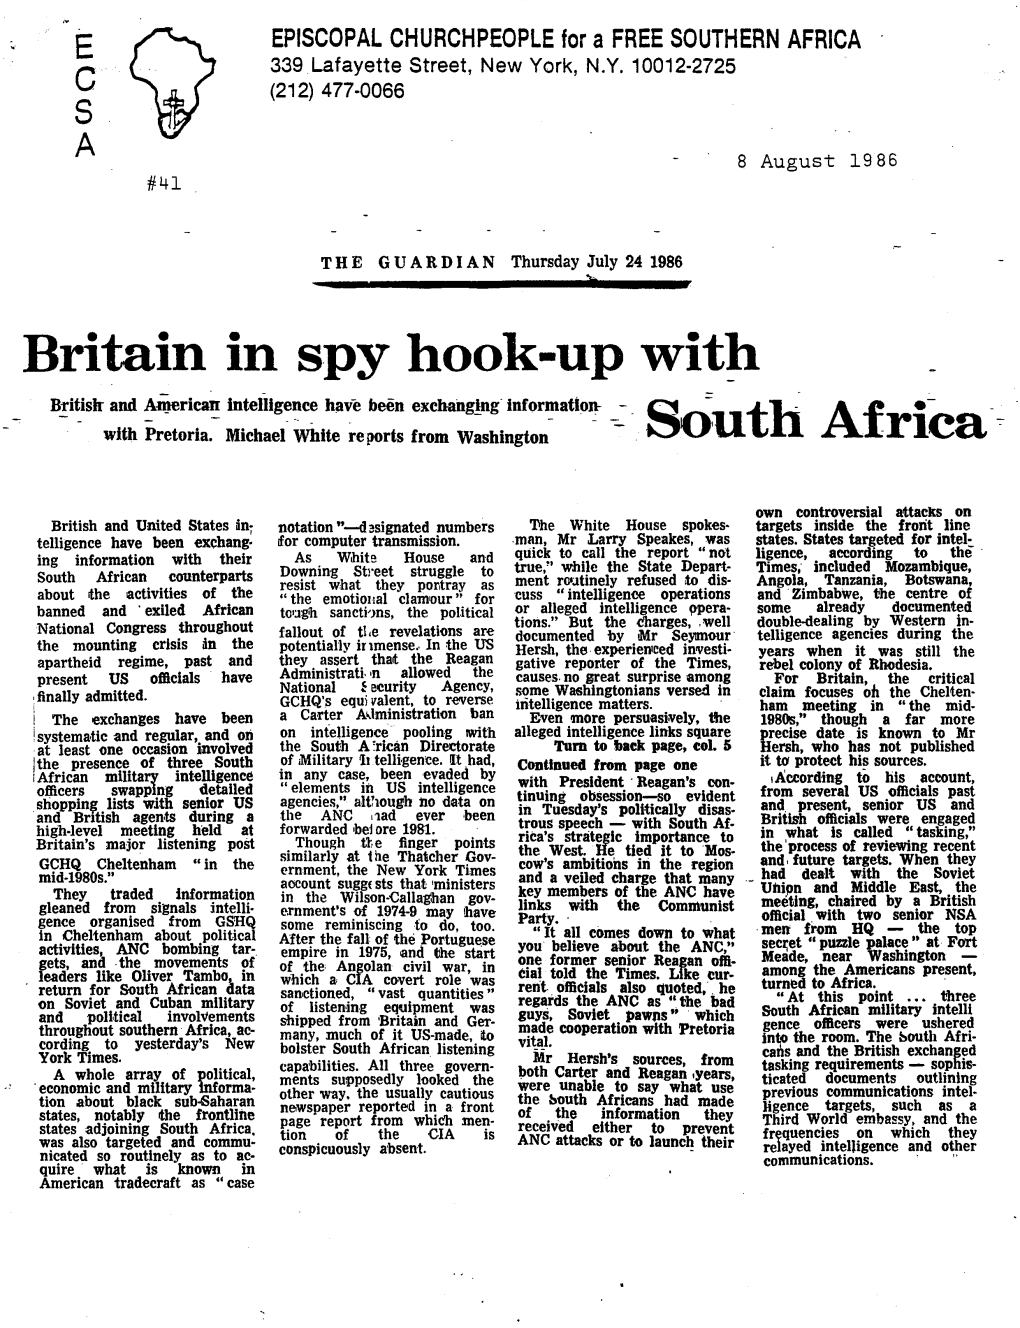 Britain in Spy Hook-Up Witjt